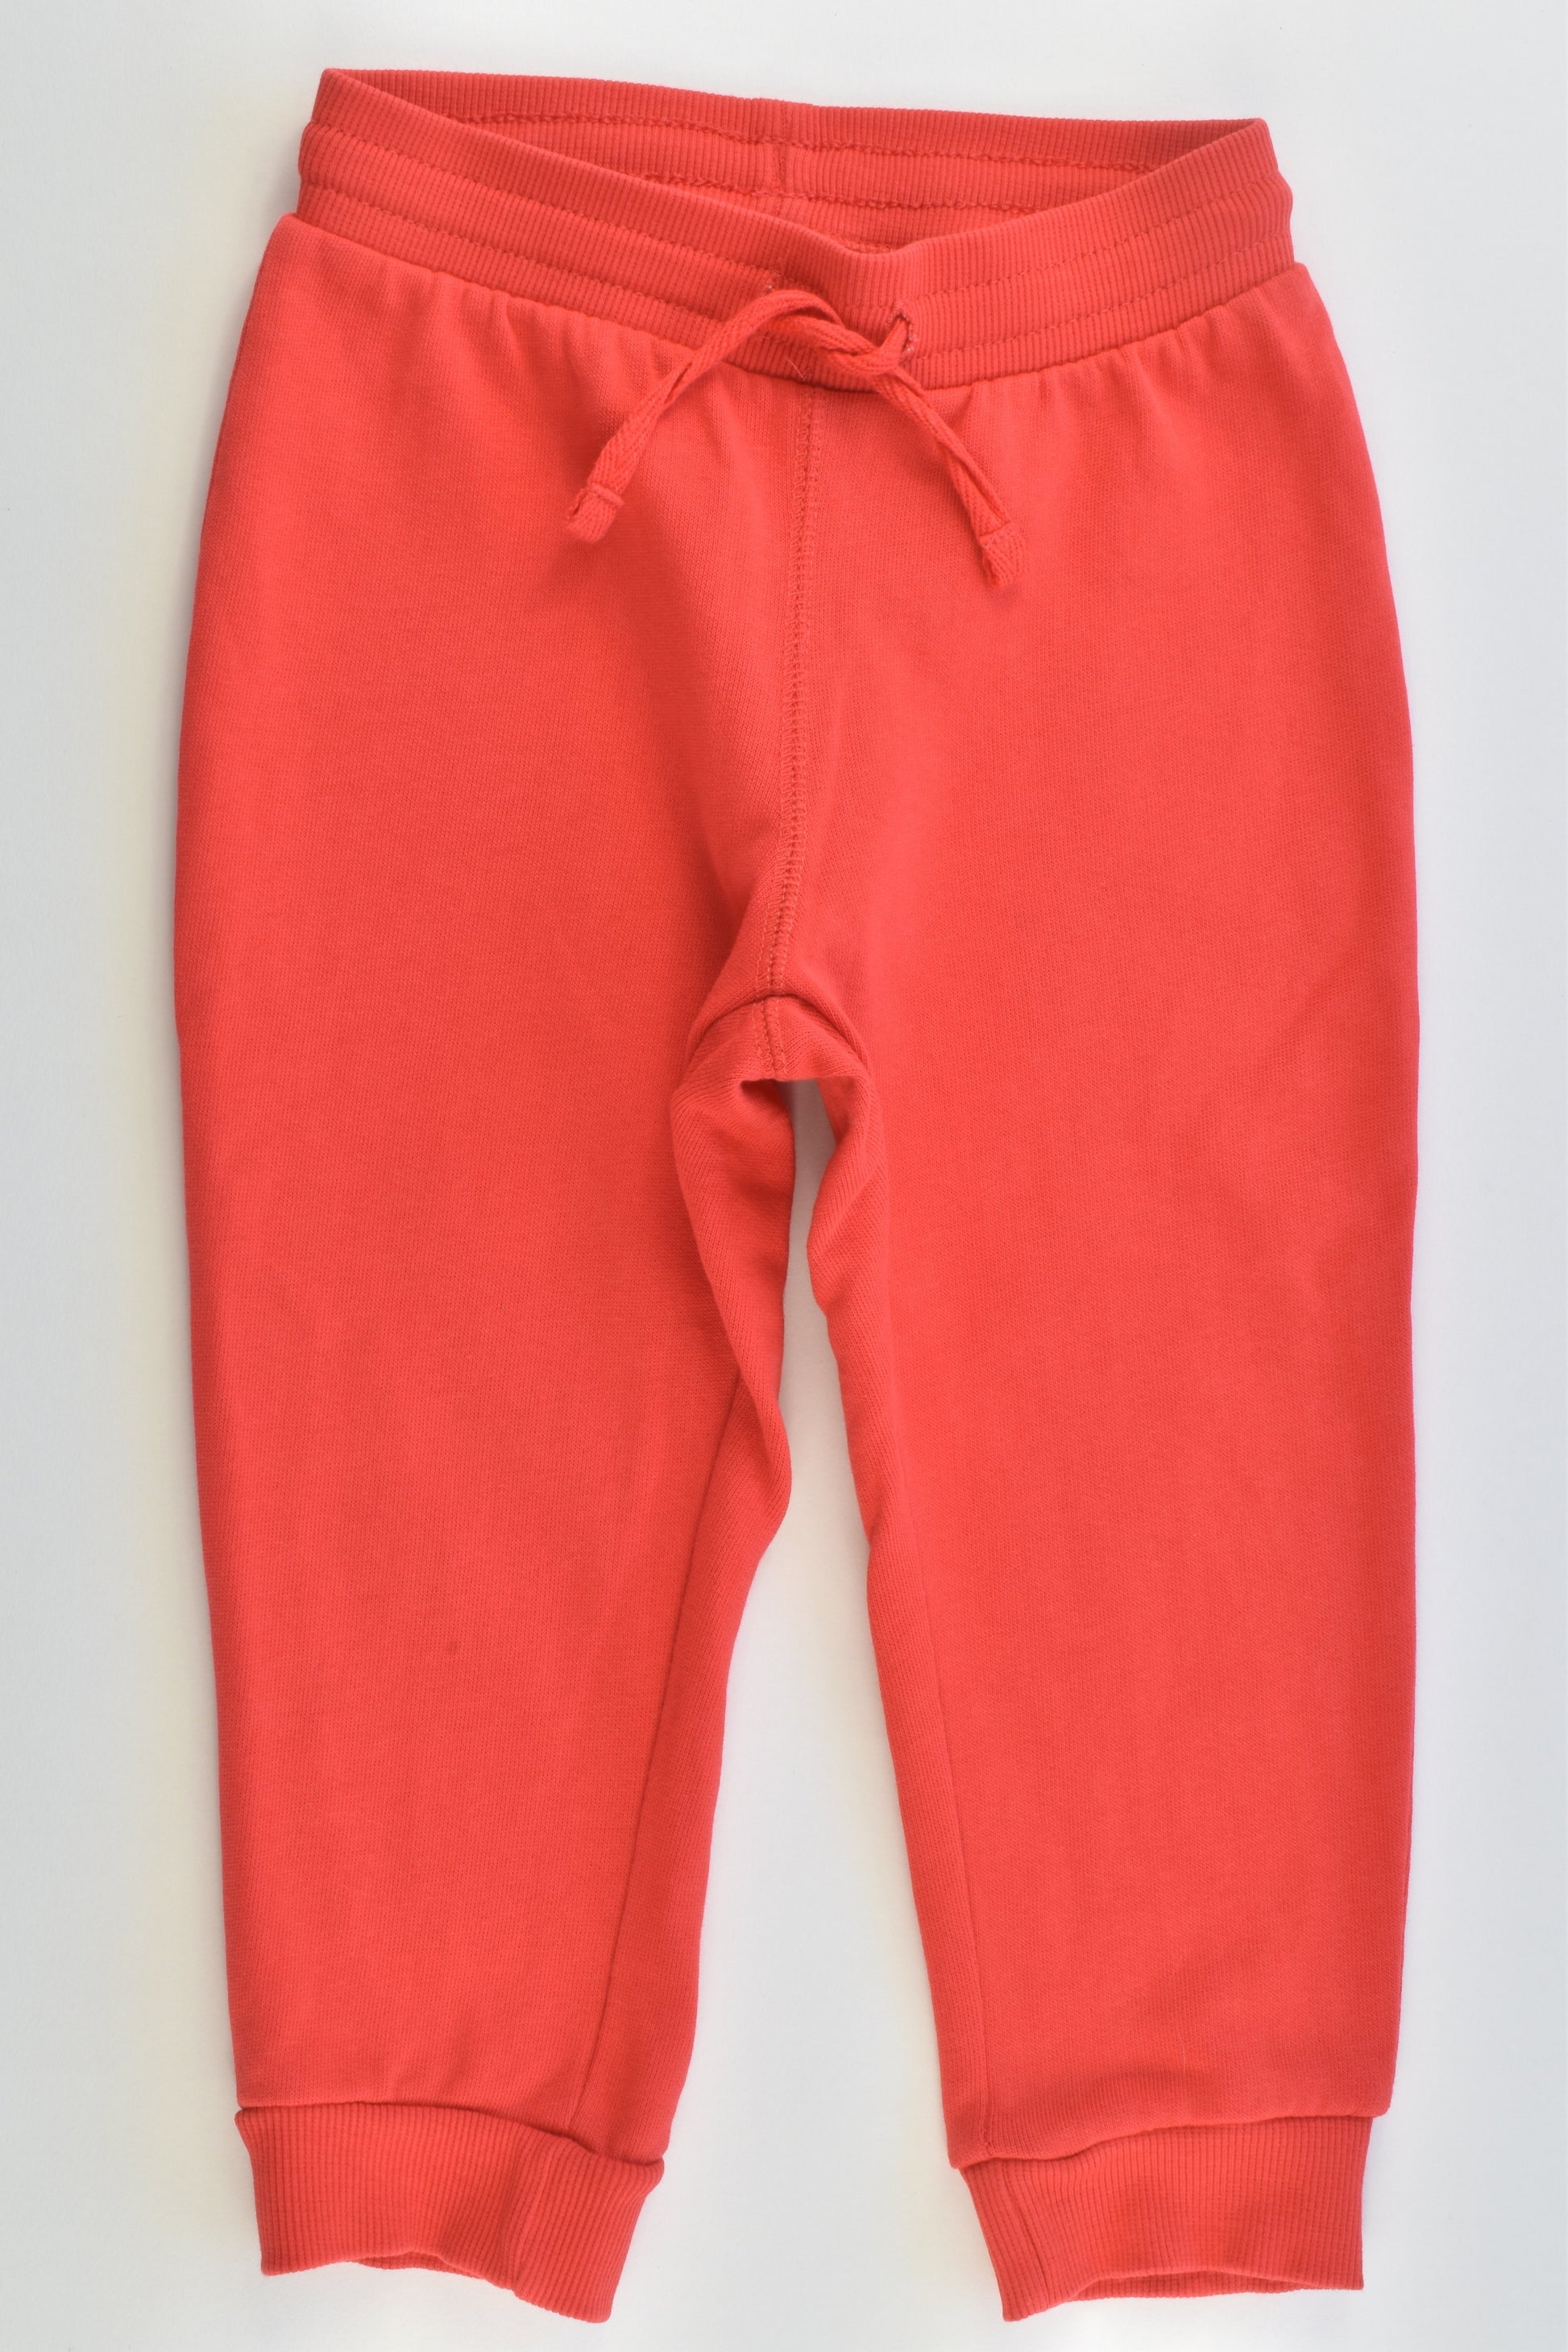 H&M Size 1 (86 cm) Trackpants